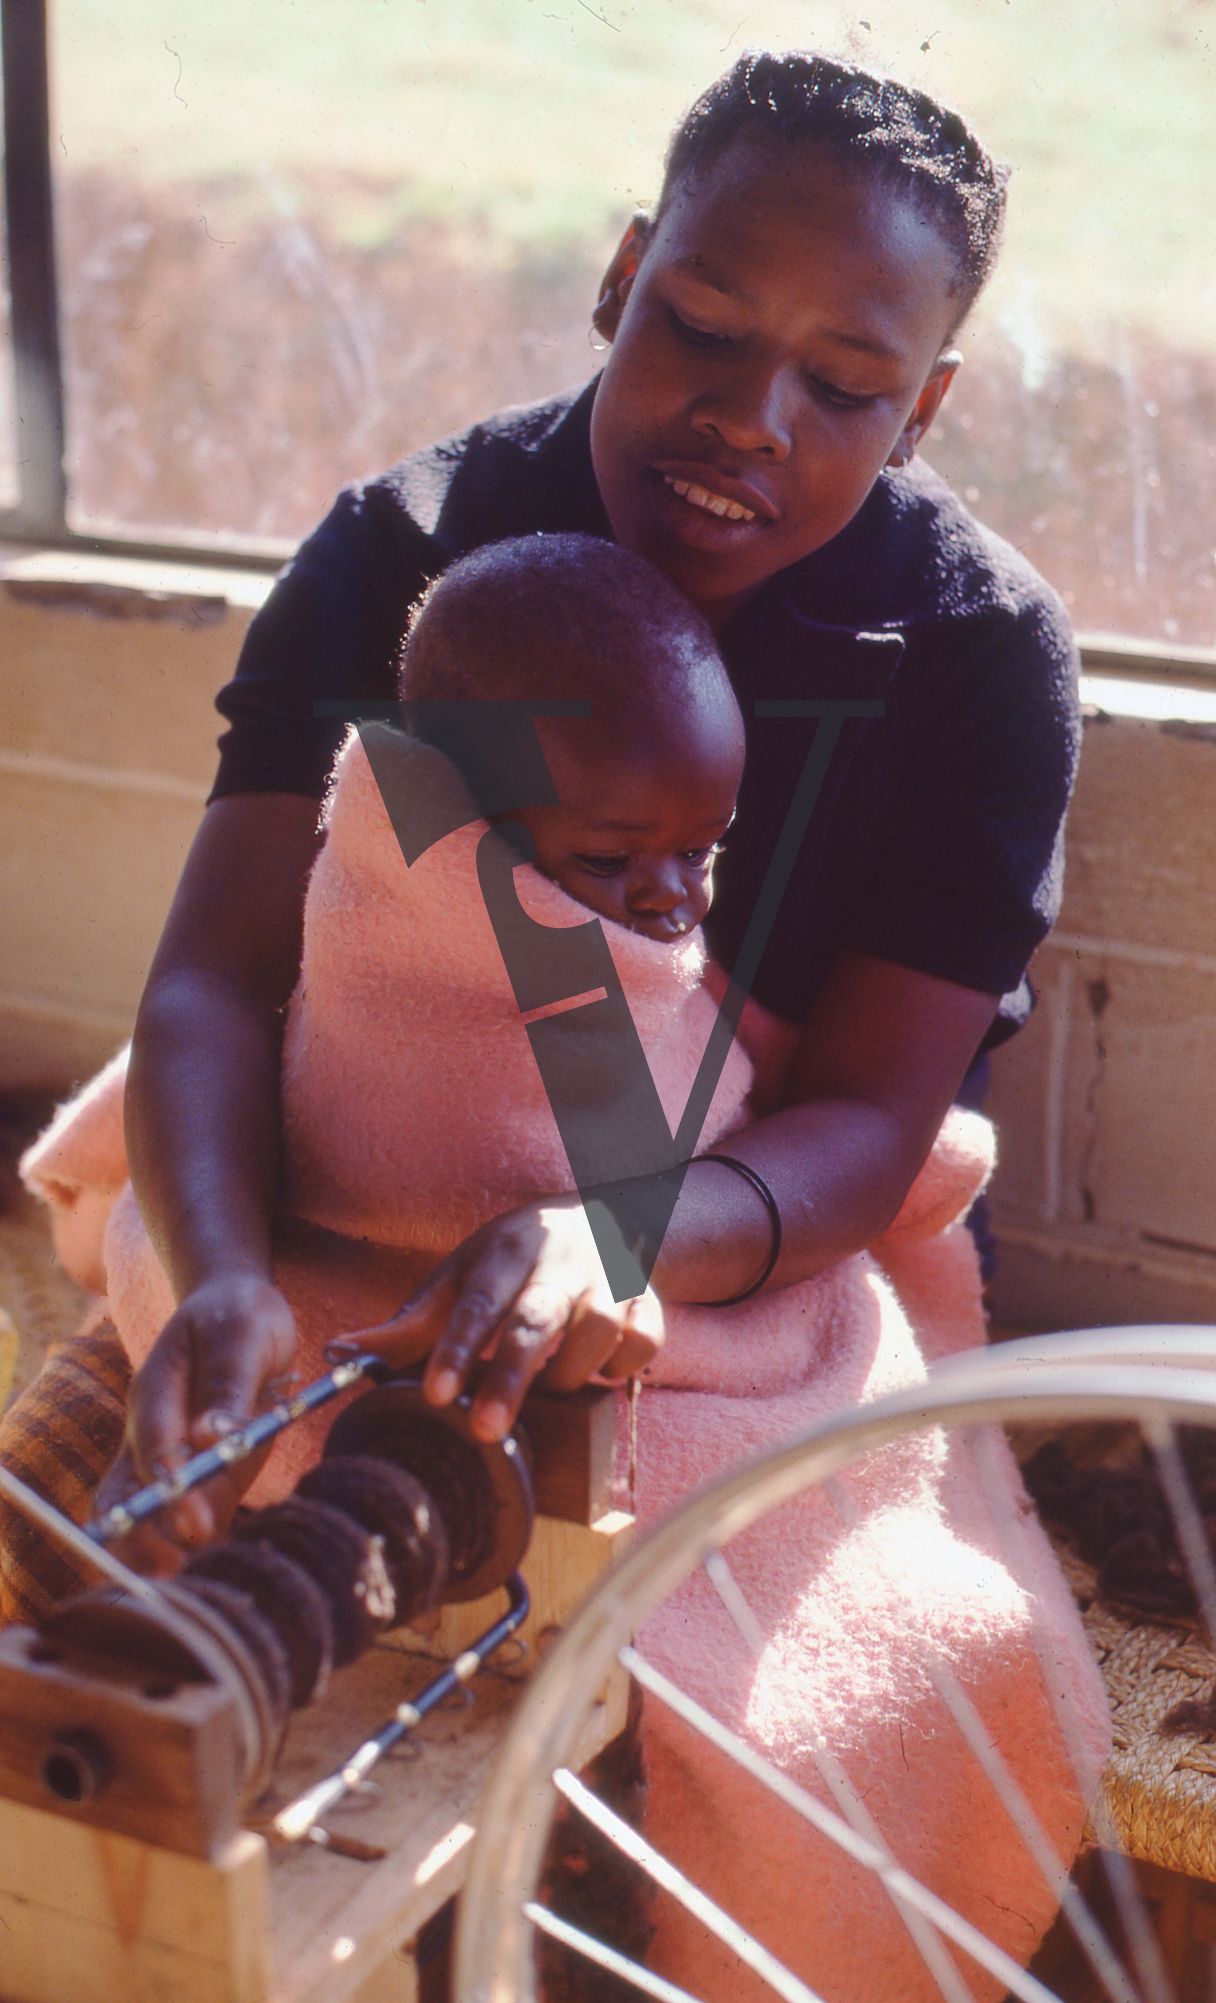 Lesotho, Handspun mohair farming community, spinning wheel, woman at work, holds child in blanket.